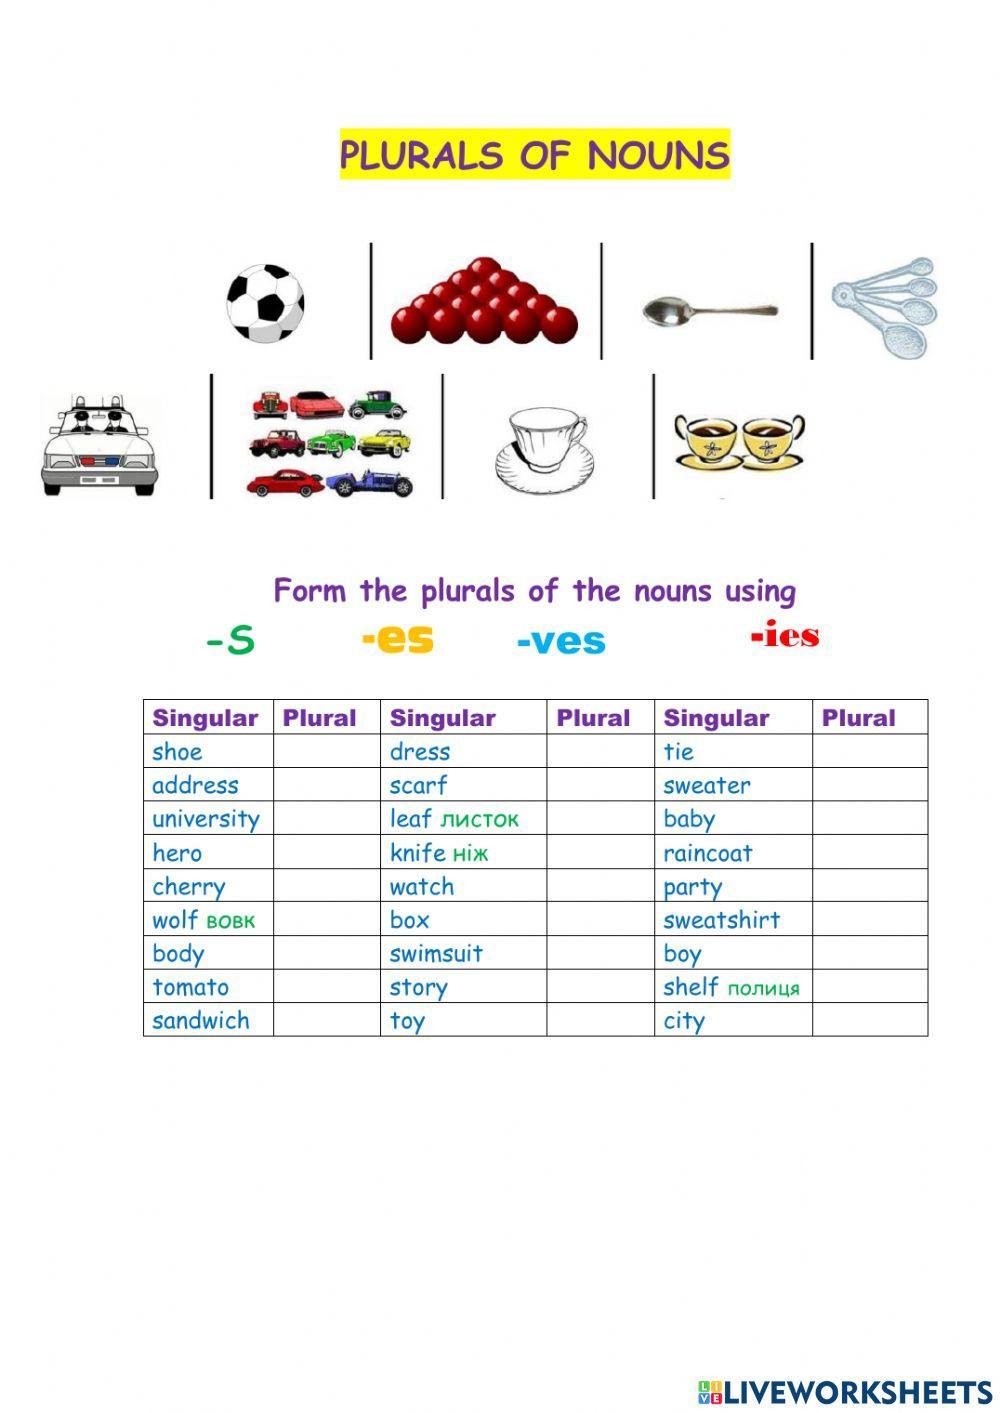 Plurals of nouns (regular)